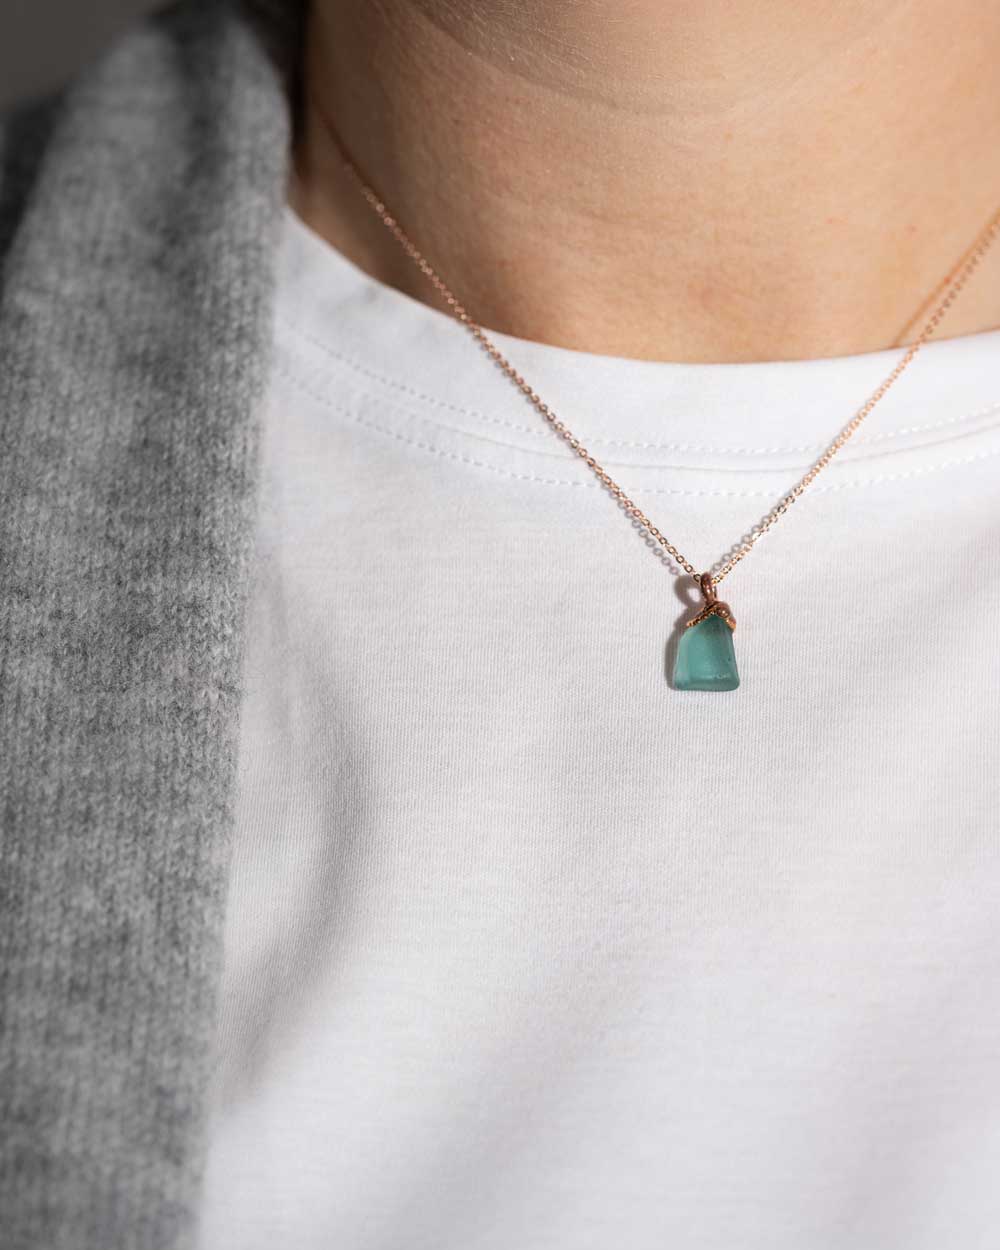 Copper or Silver Sea Glass Mini Pendant Necklaces - Best Seller!